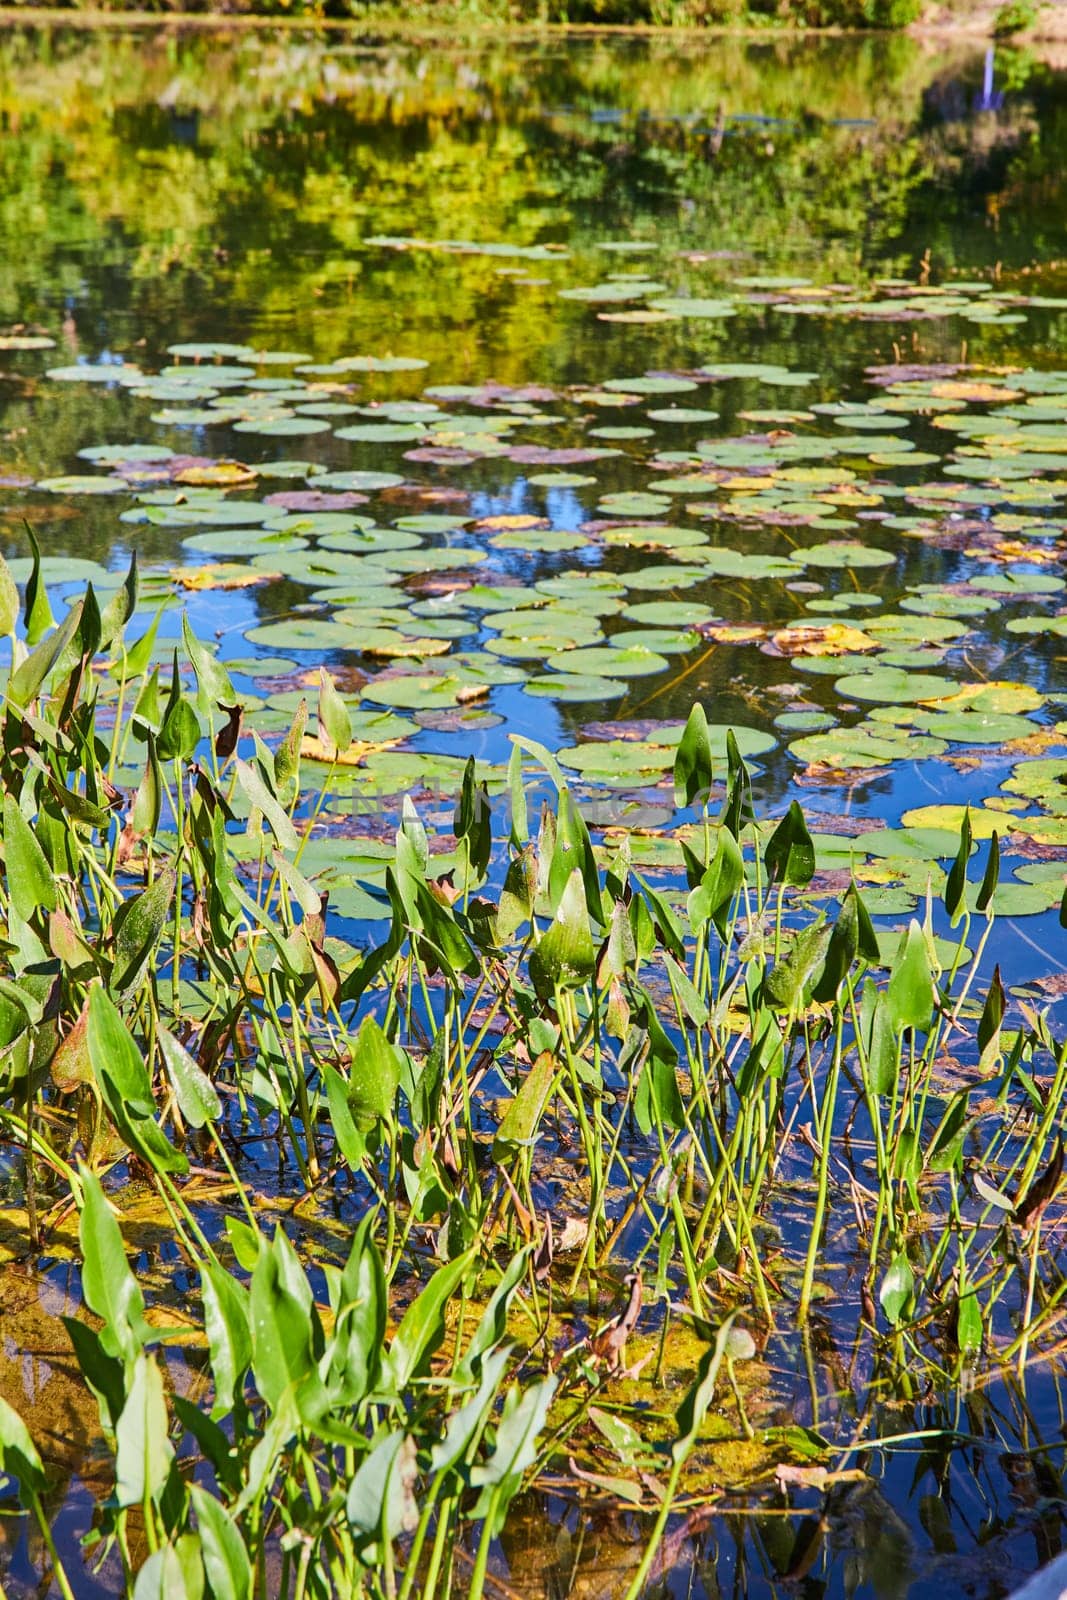 Sunny Day at Elkhart's Botanic Gardens, Indiana, 2023 - Vibrant Aquatic Vegetation in Serene Freshwater Habitat